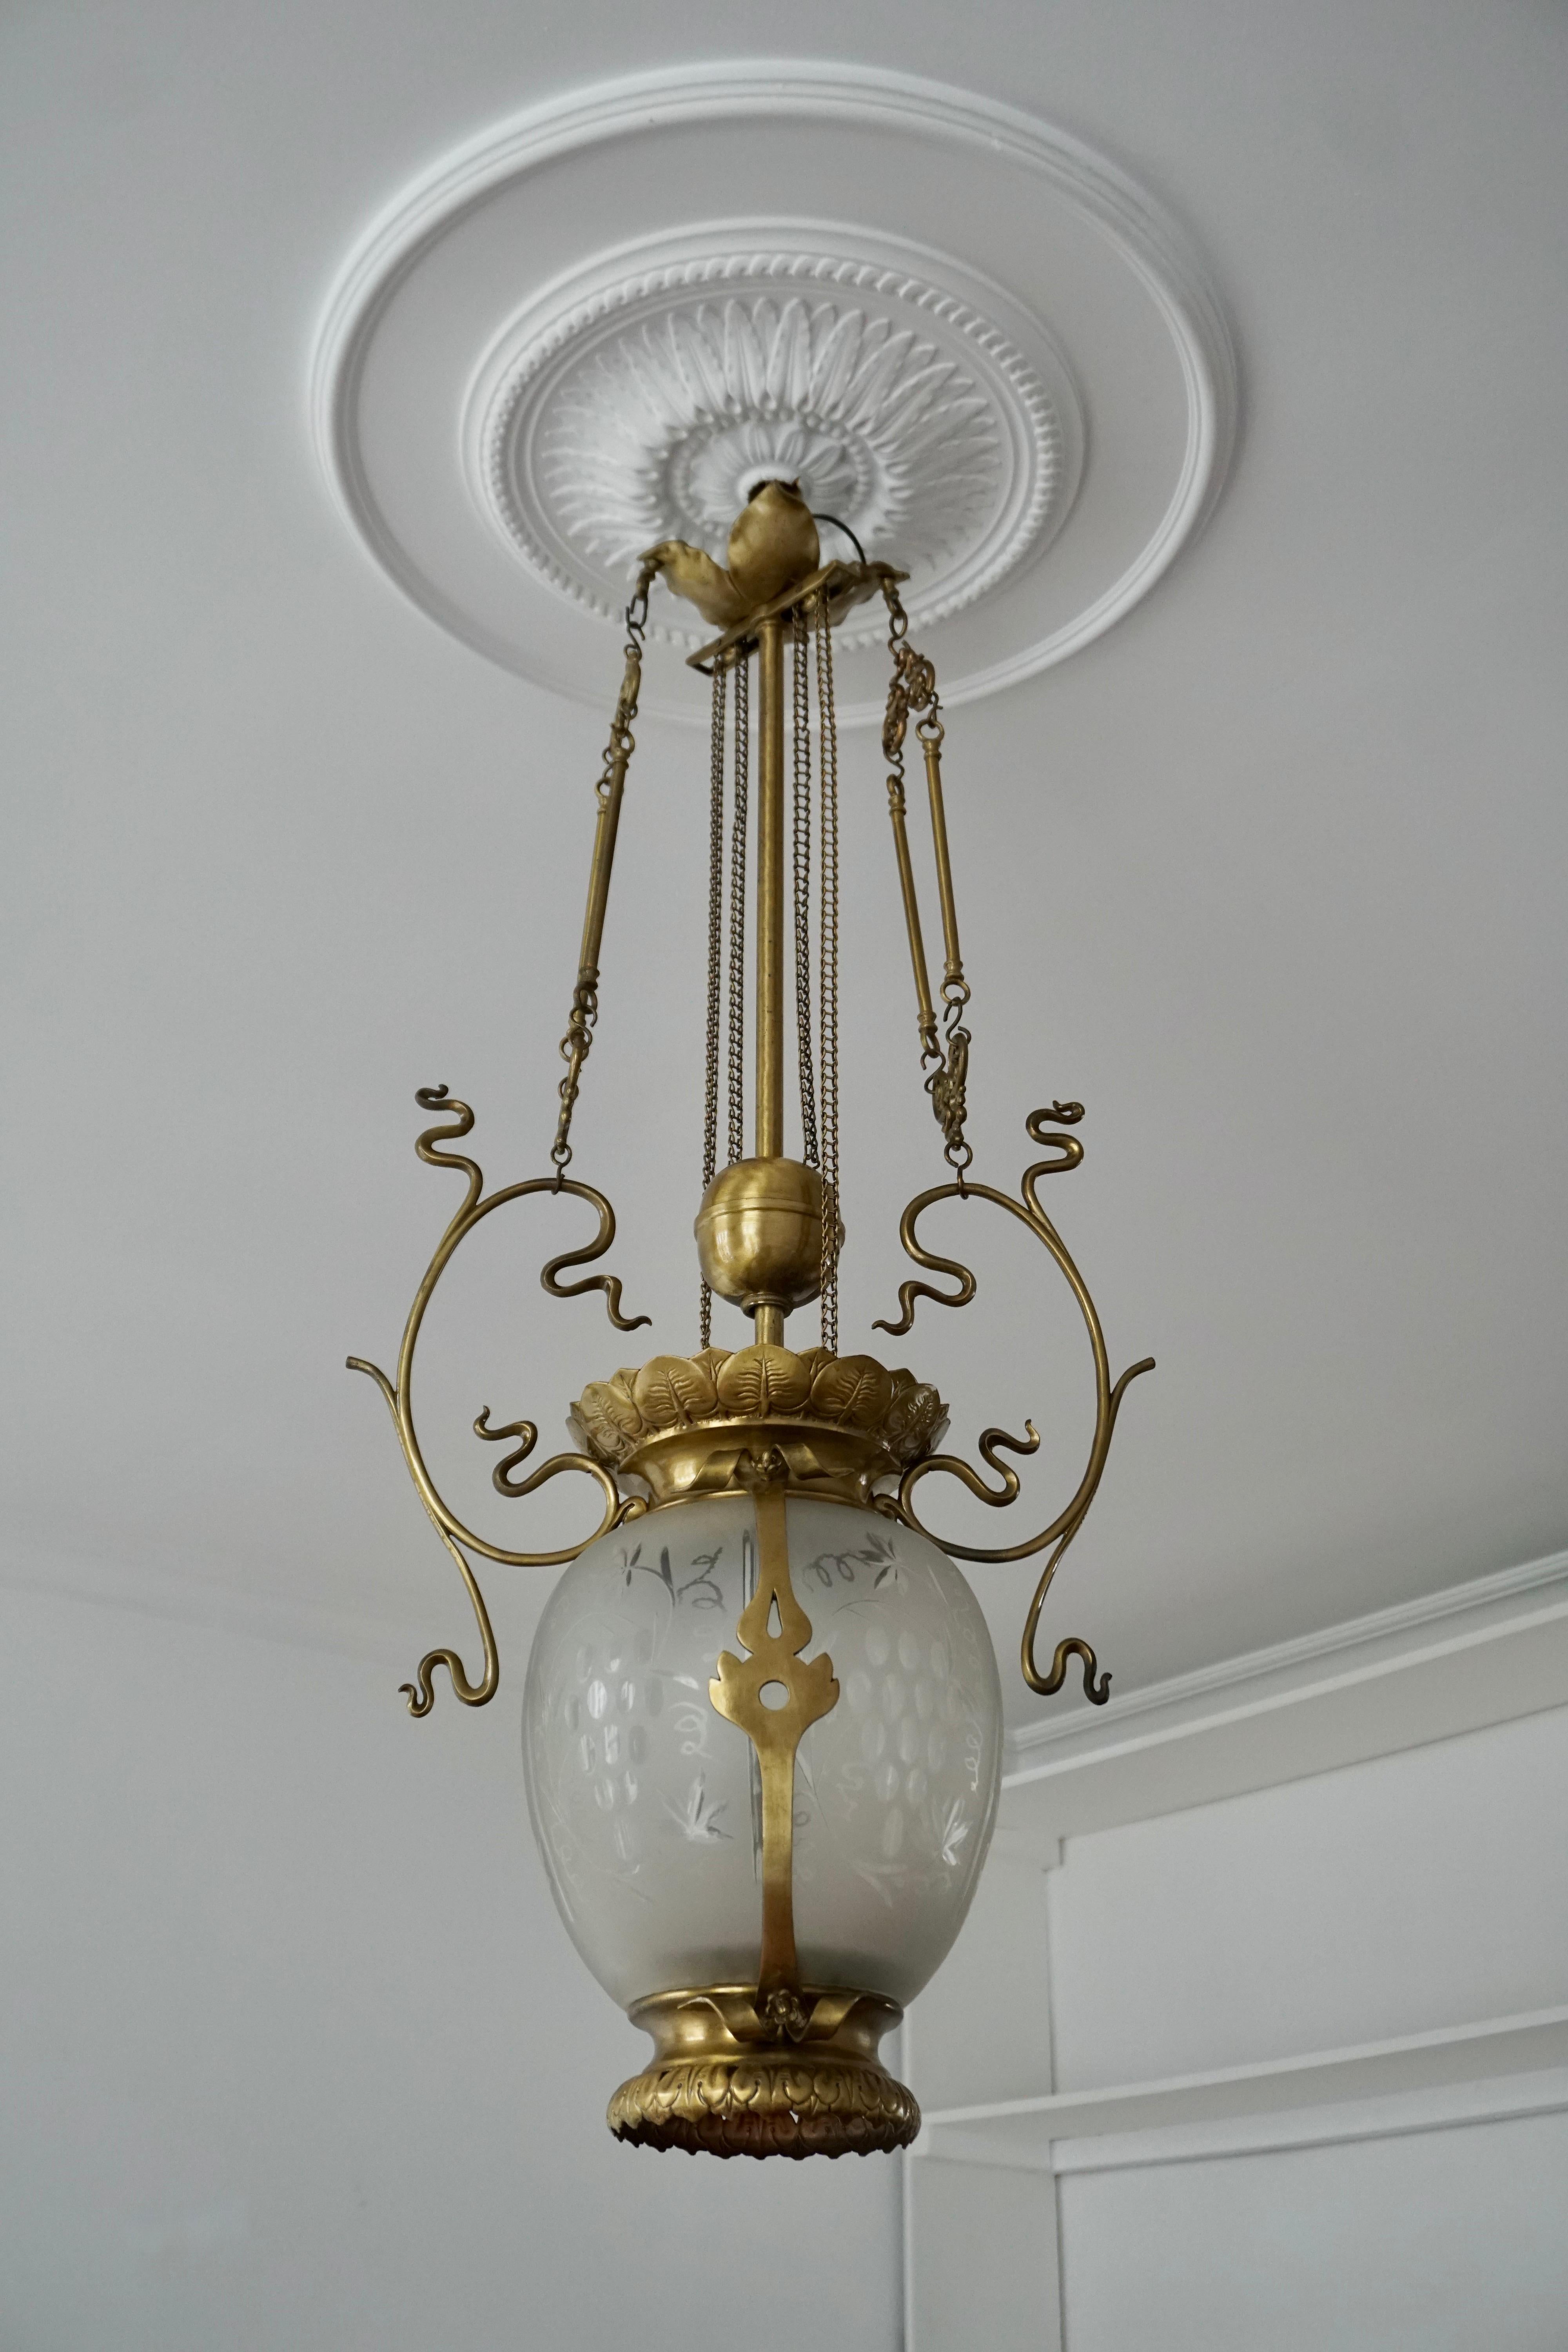 Elegant Art Deco chandelier or lantern in brass and glass.
Belgium, 1900-1930.

The light requires one single E27 screw fit lightbulbs (100 Watt max.) LED compatible.

Measures: Height 95 cm.
Width 44 cm.
Depth 23 cm.